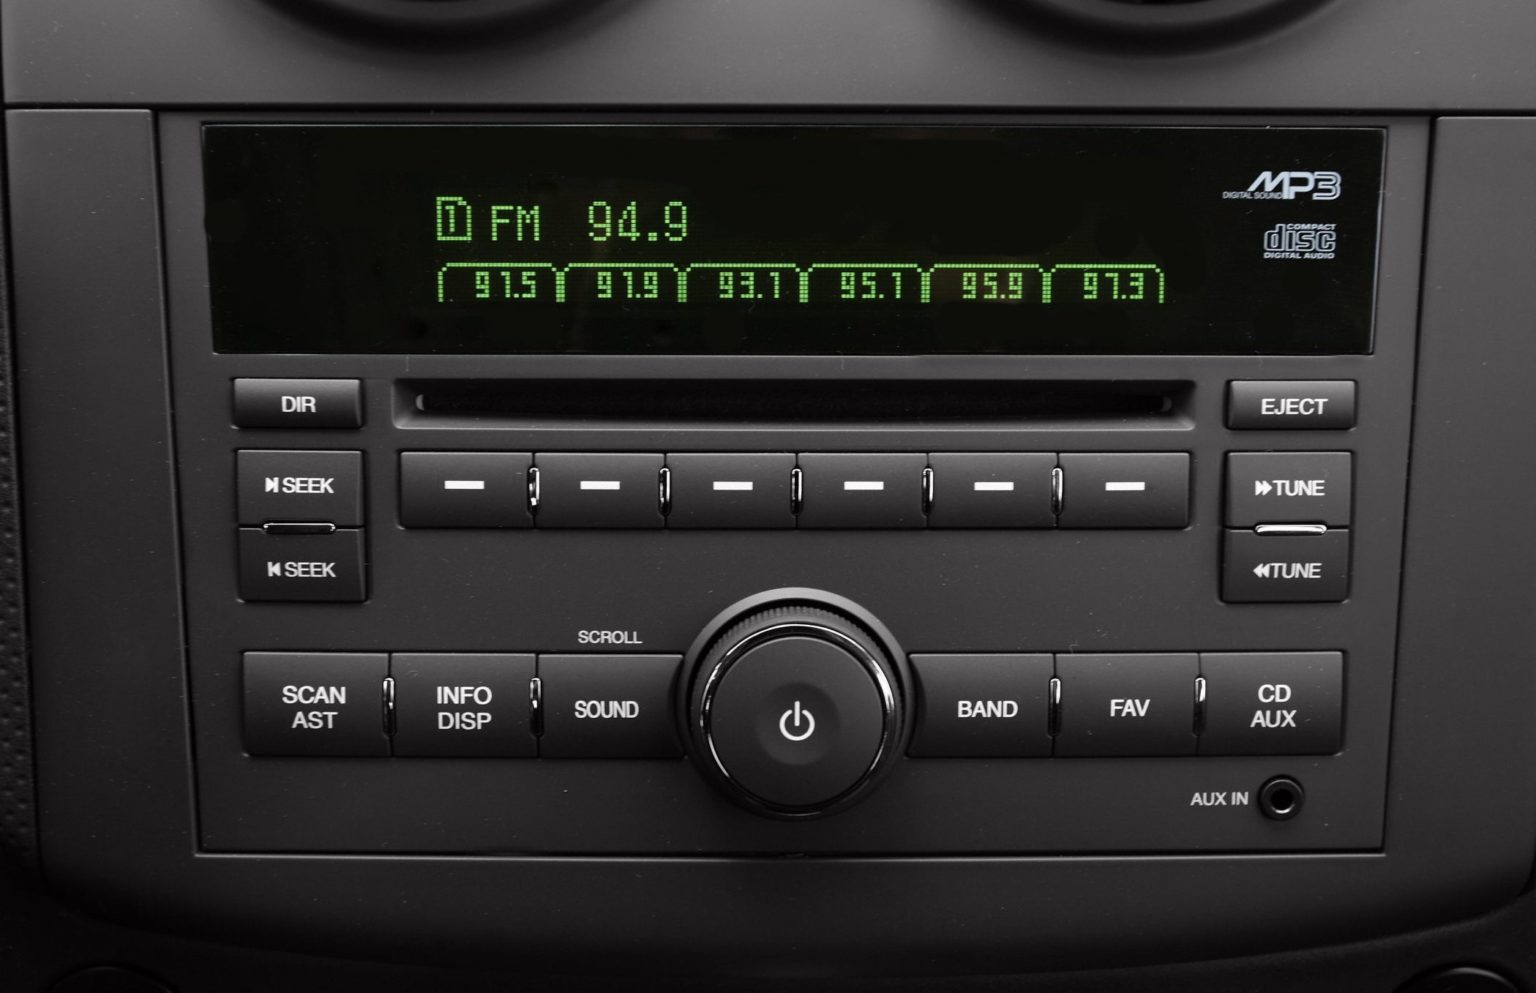 Chevrolet Aveo Radio Code Generator Software Free Download